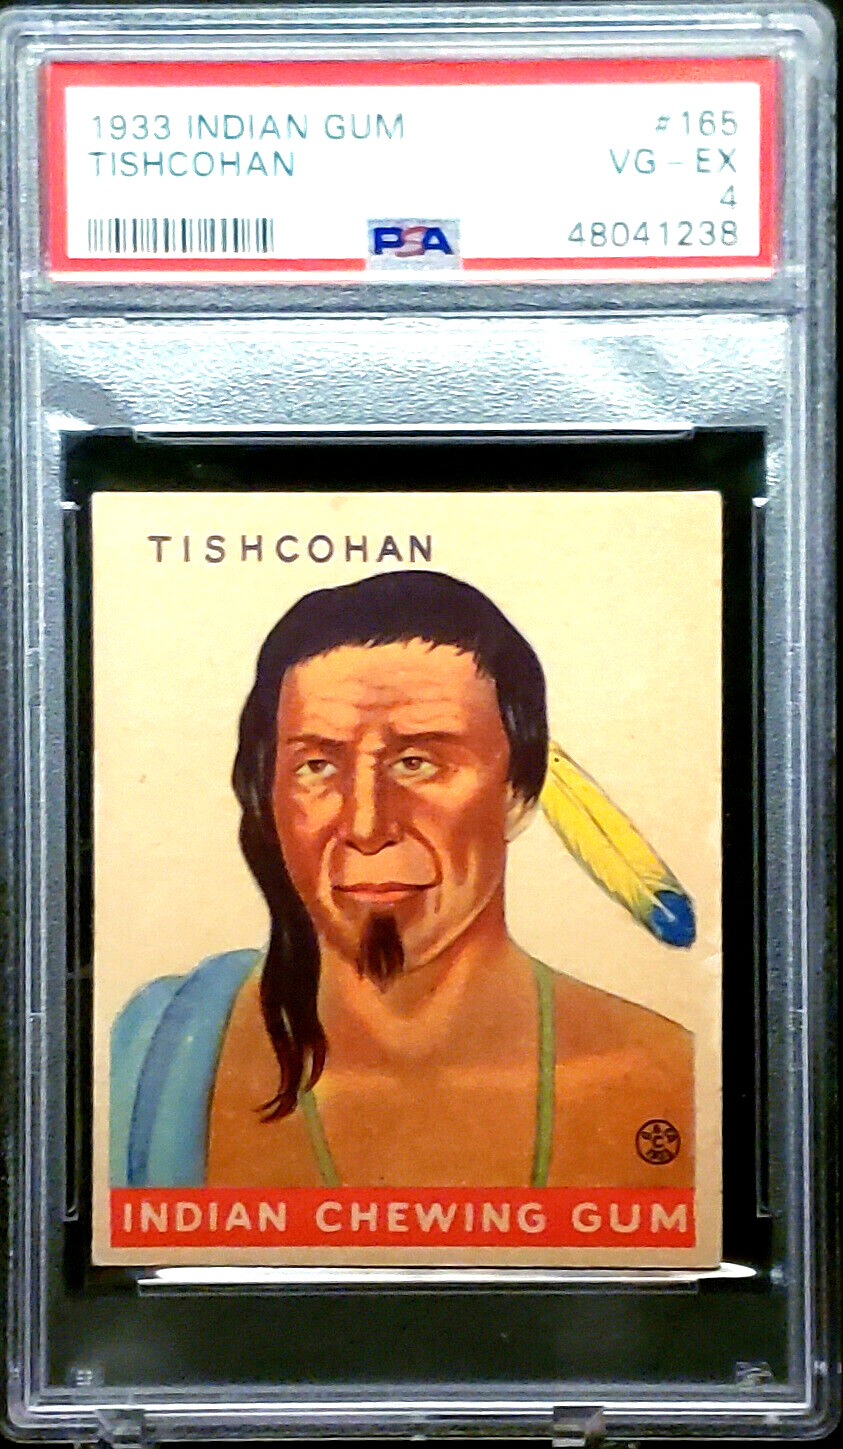 1933 R73 Goudey Indian Gum Card #165 - Series of 312 - TISHCOHAN - PSA 4